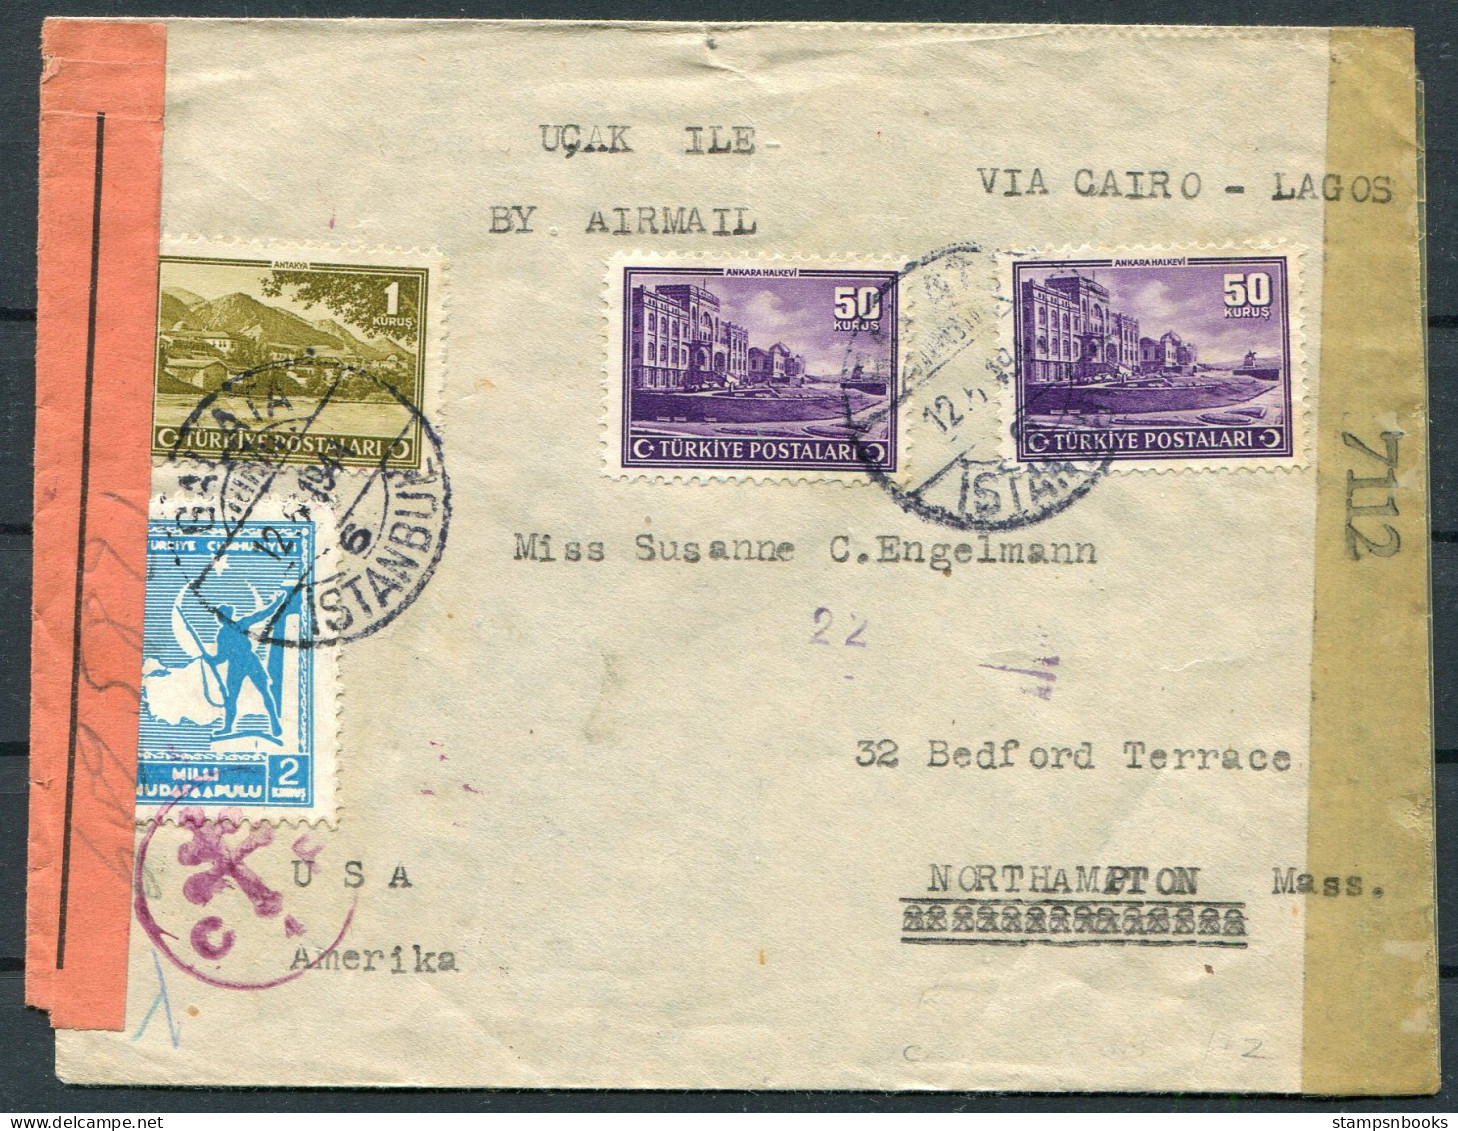 1944 Turkey Istanbul Bebek Airmail Censor Cover Engelmann - Northampton Mass. USA Via Cairo / Lagos - Lettres & Documents